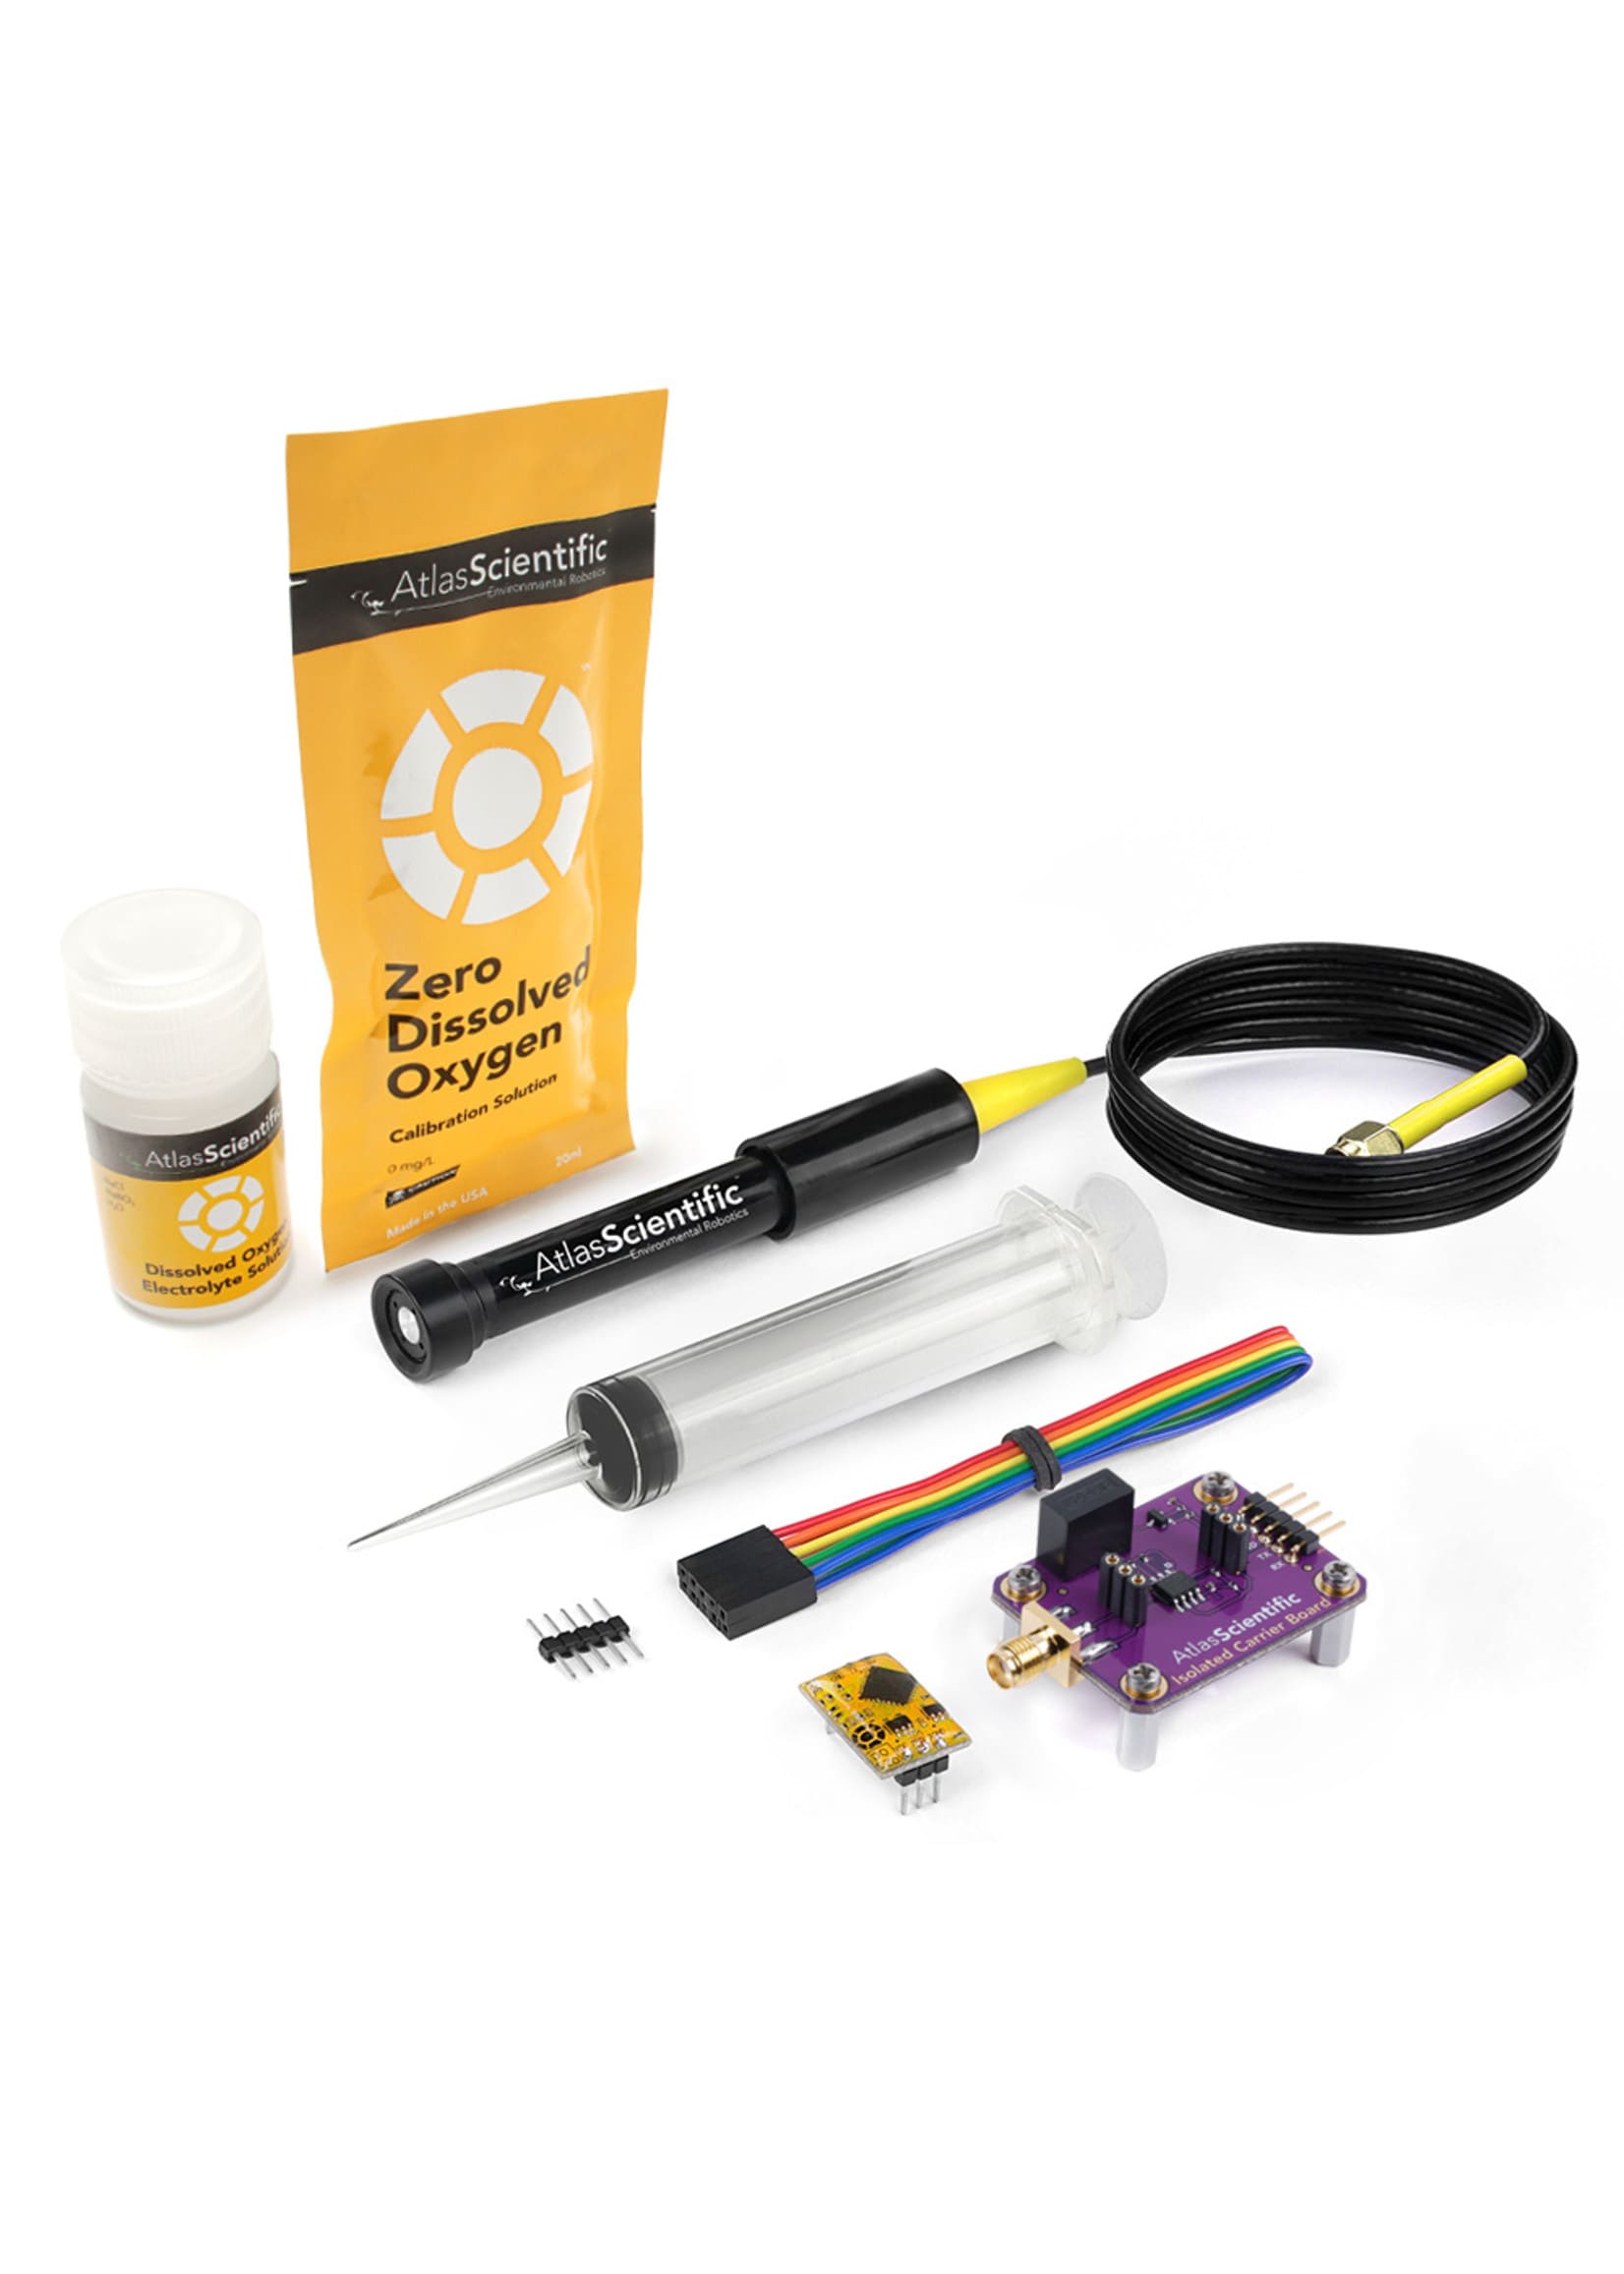 Low Cost Oxygen Sensor for Arduino